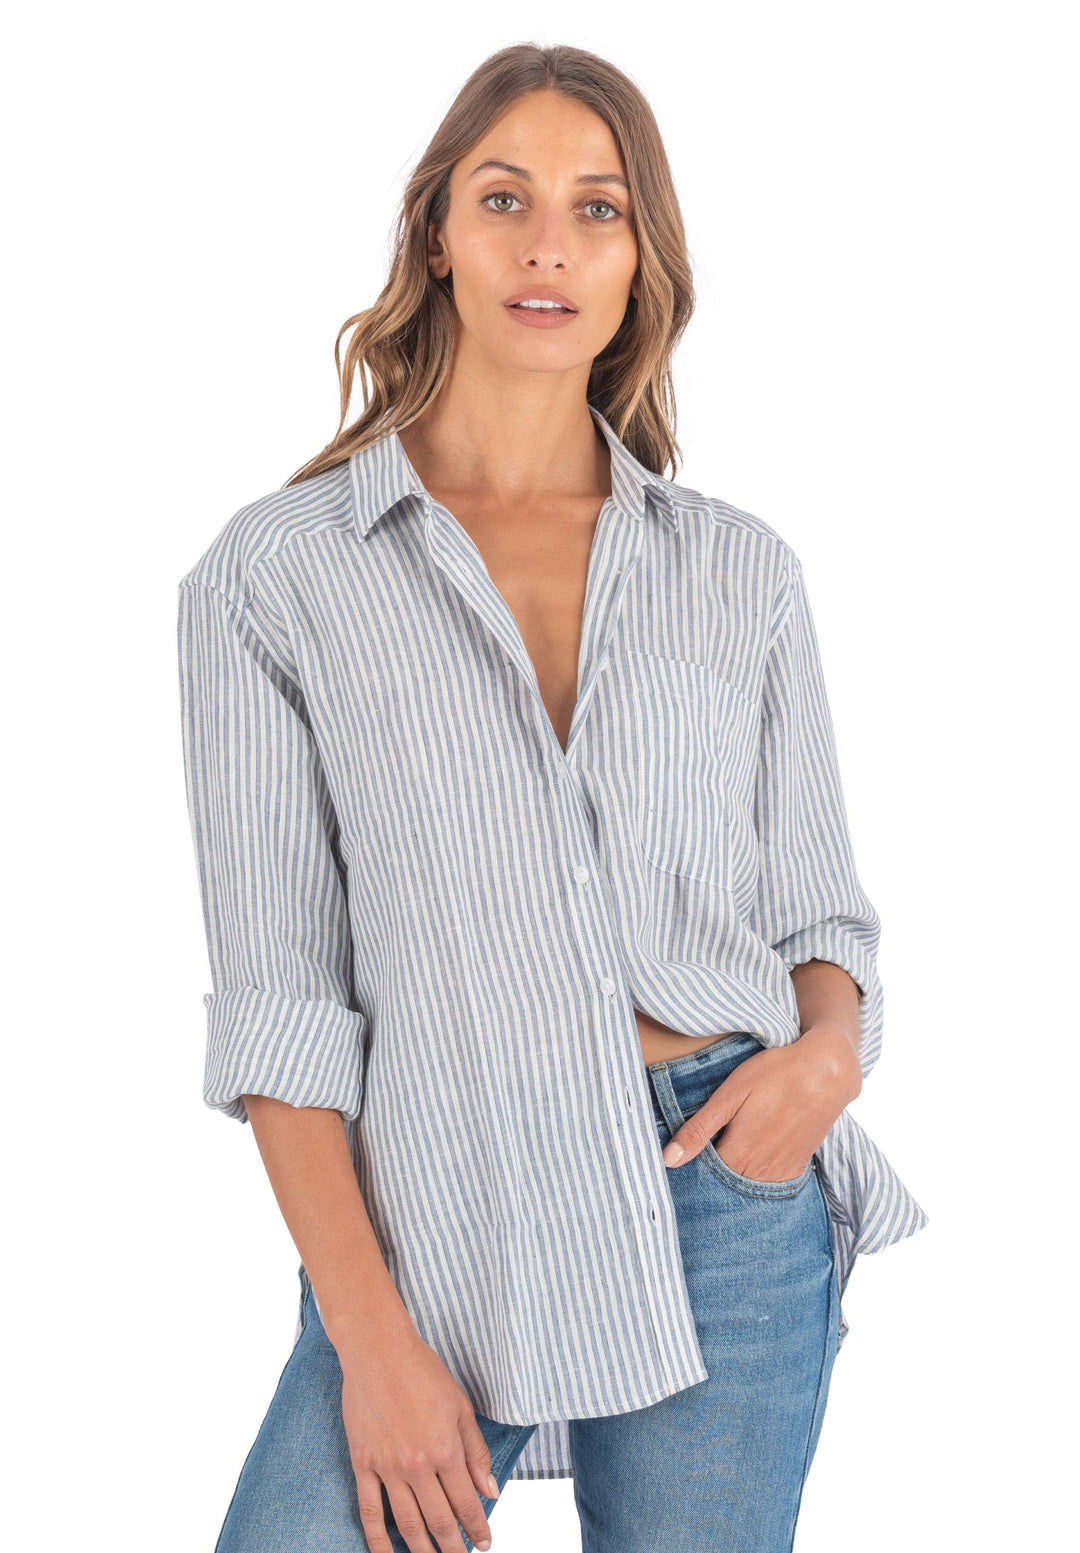 Zpanxa Womens Tops Short Sleeve Summer T-Shirts Curved Hem Casual Fashion  Shirts Khaki M